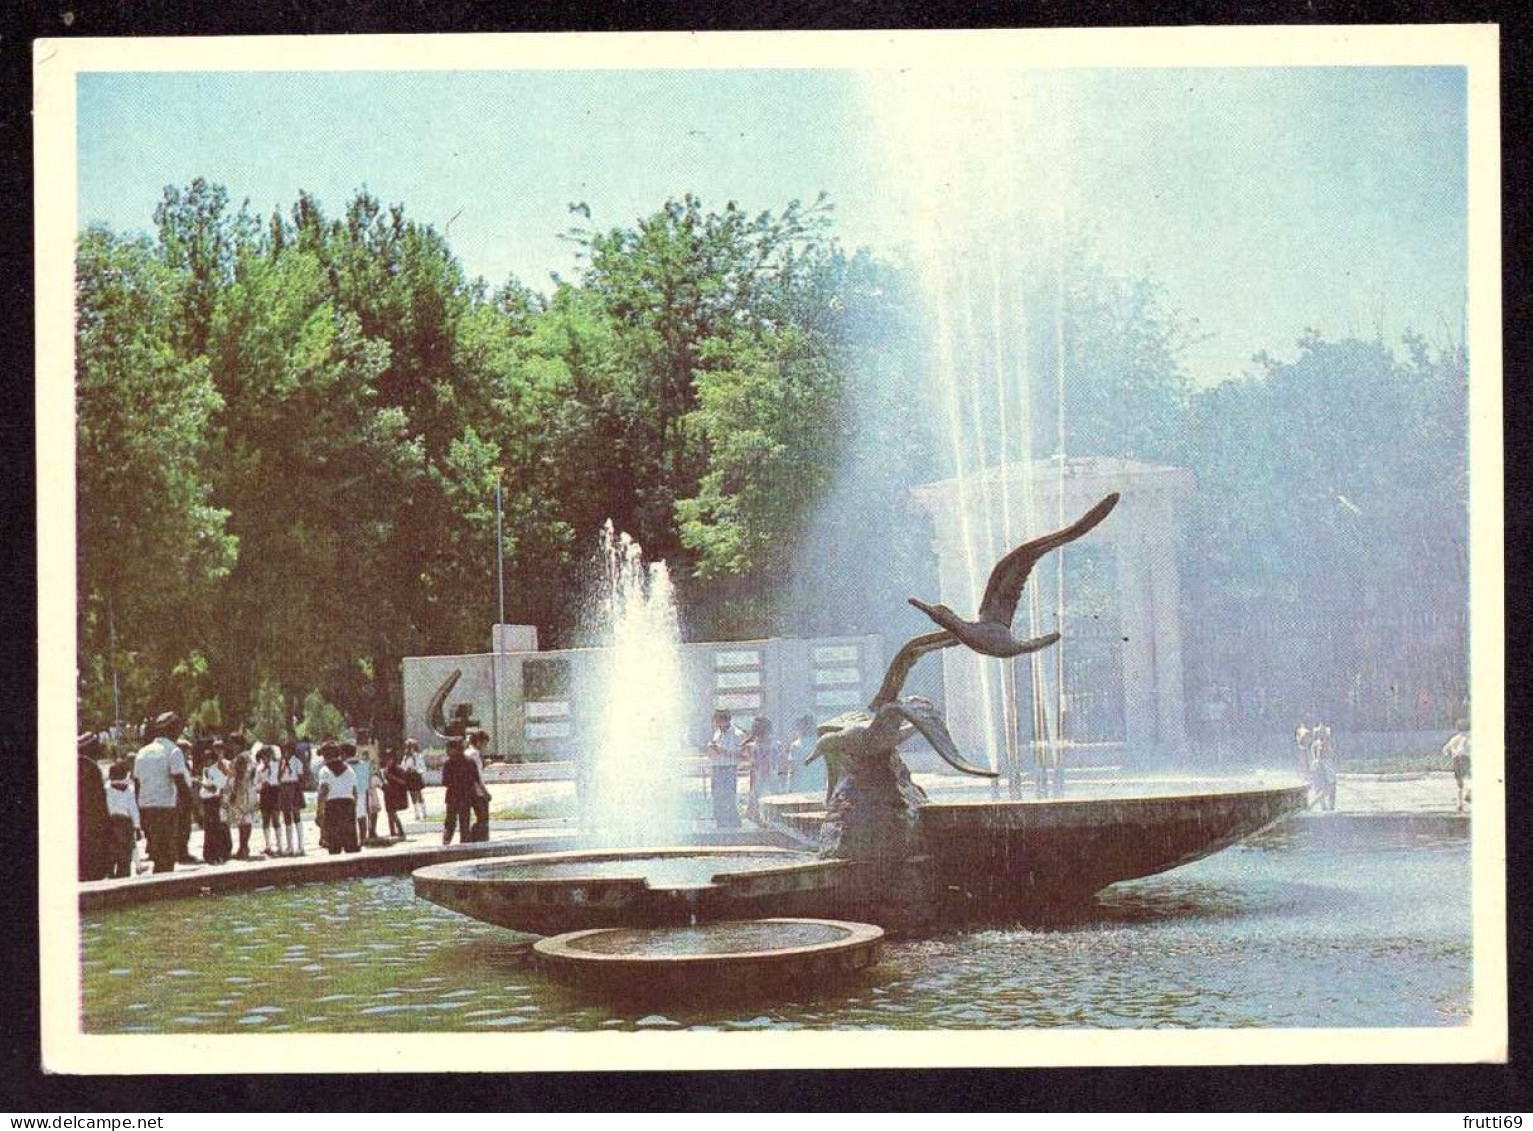 AK 212353 UZBEKISTAN - Samarkand - Sea-Gull Fountain In The Recreation Park - Ouzbékistan